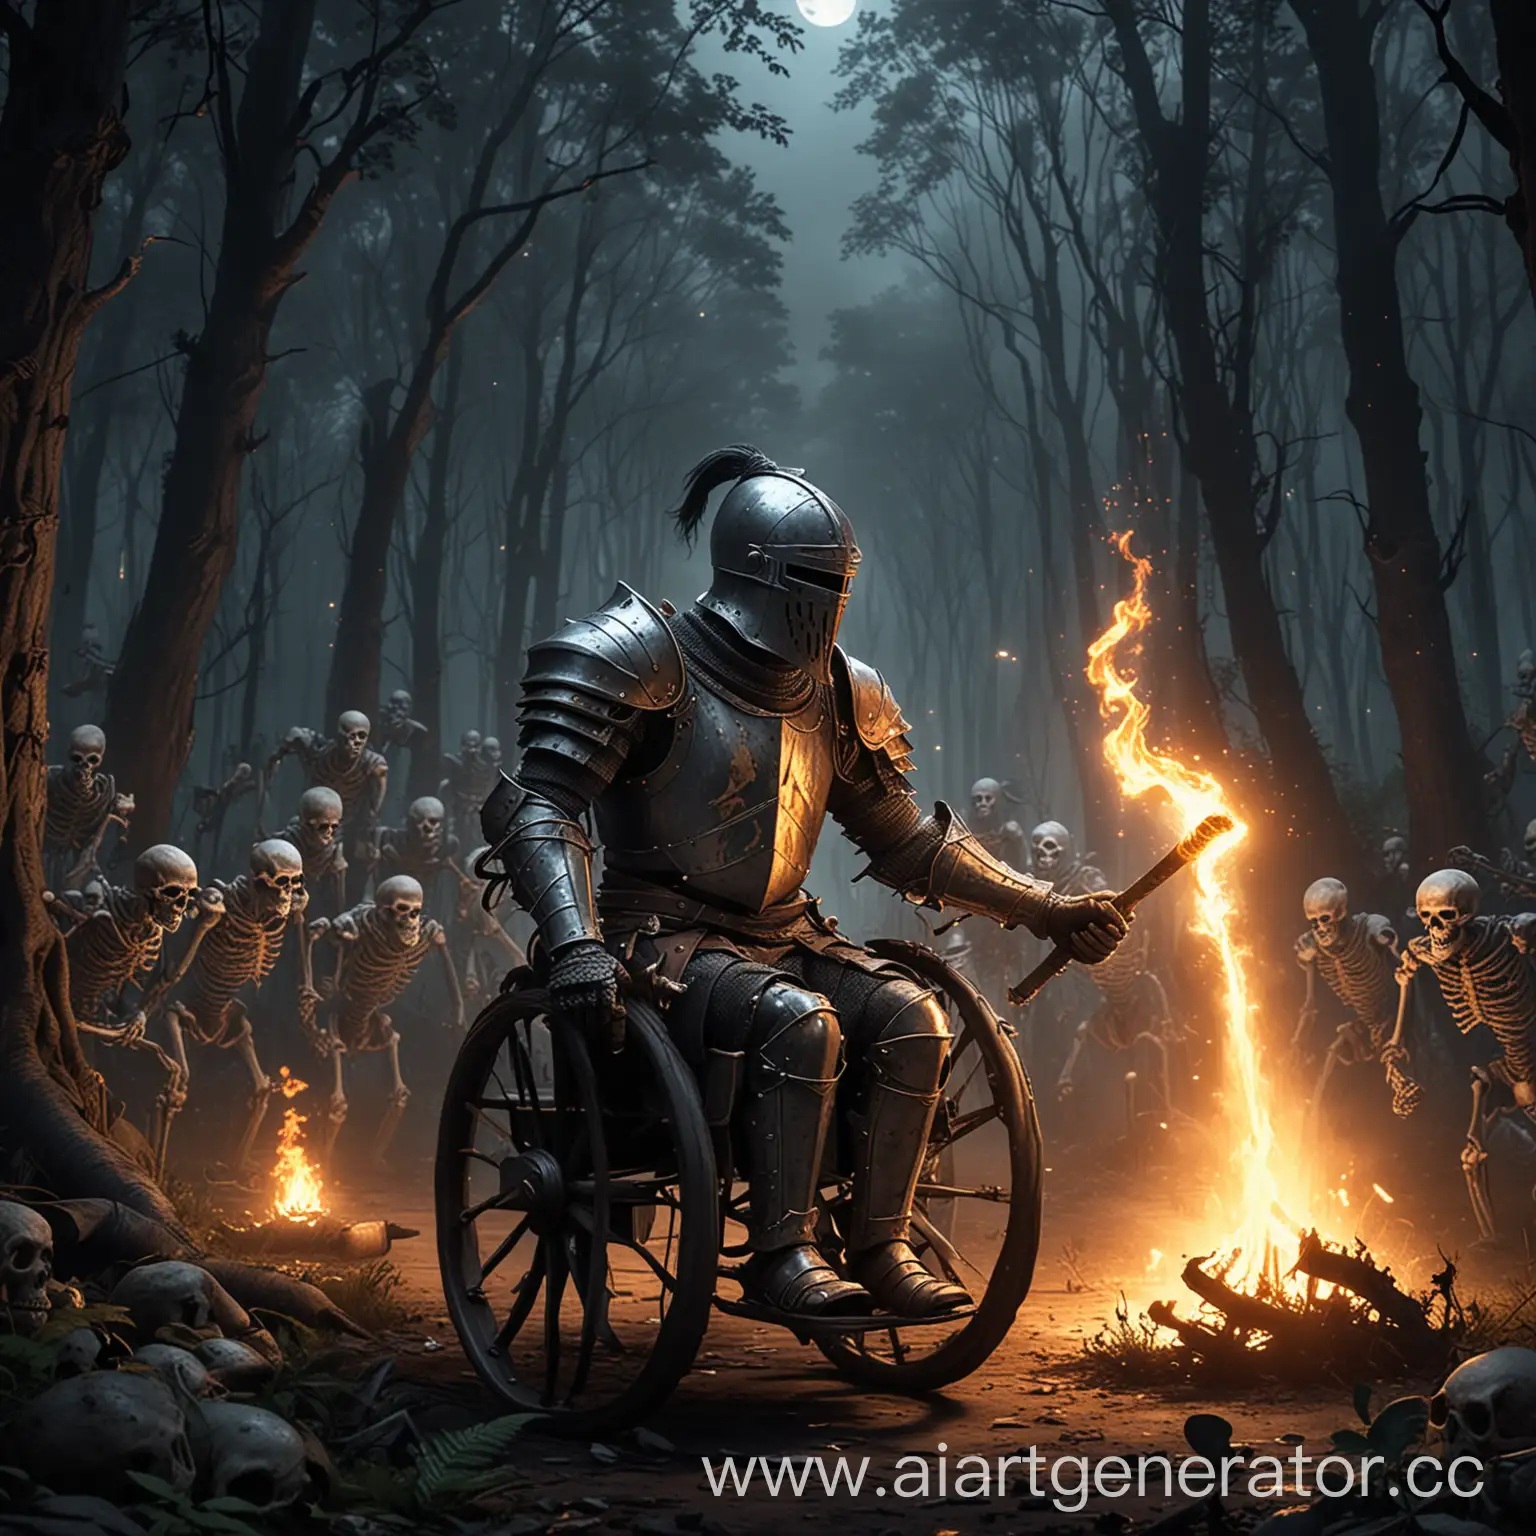 Cartoony-Knight-on-Wheelchair-Battles-Skeletons-in-Dark-Forest